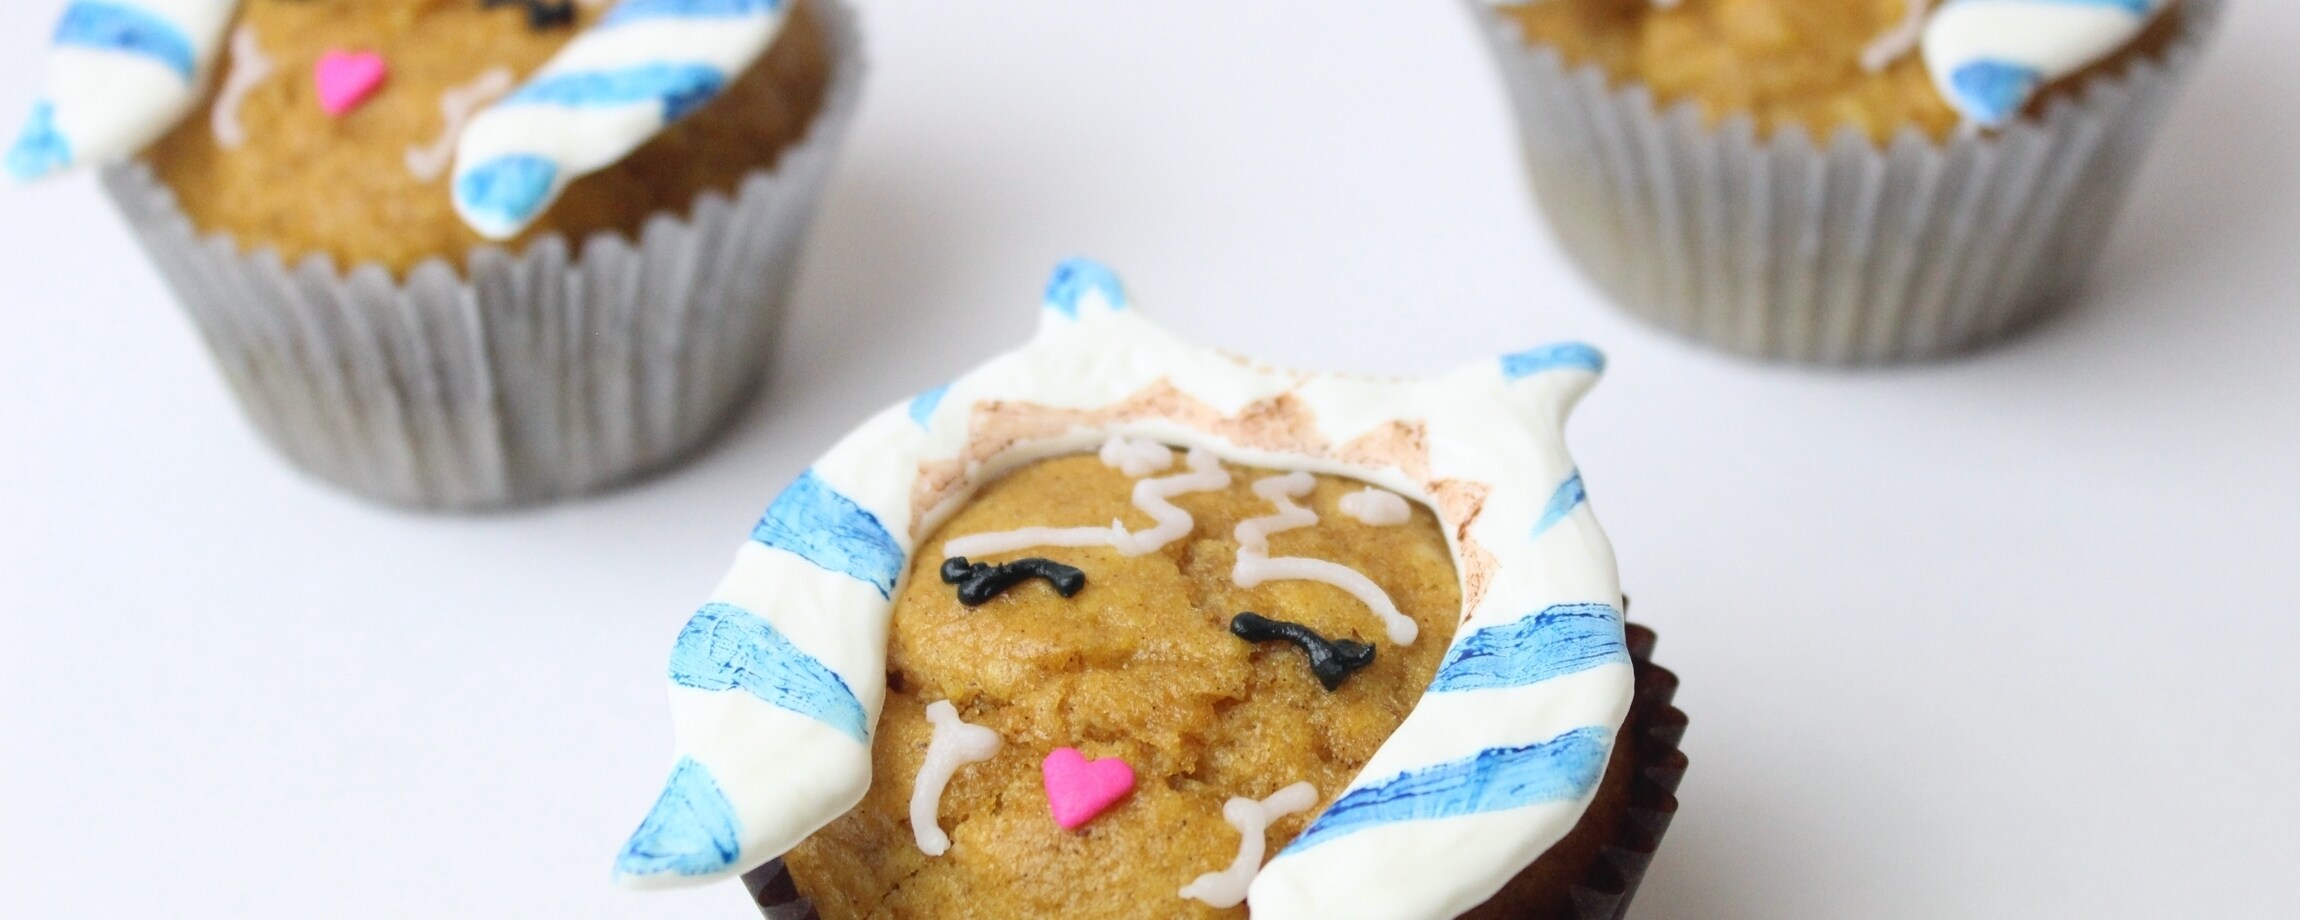 Ahsoka themed muffins.